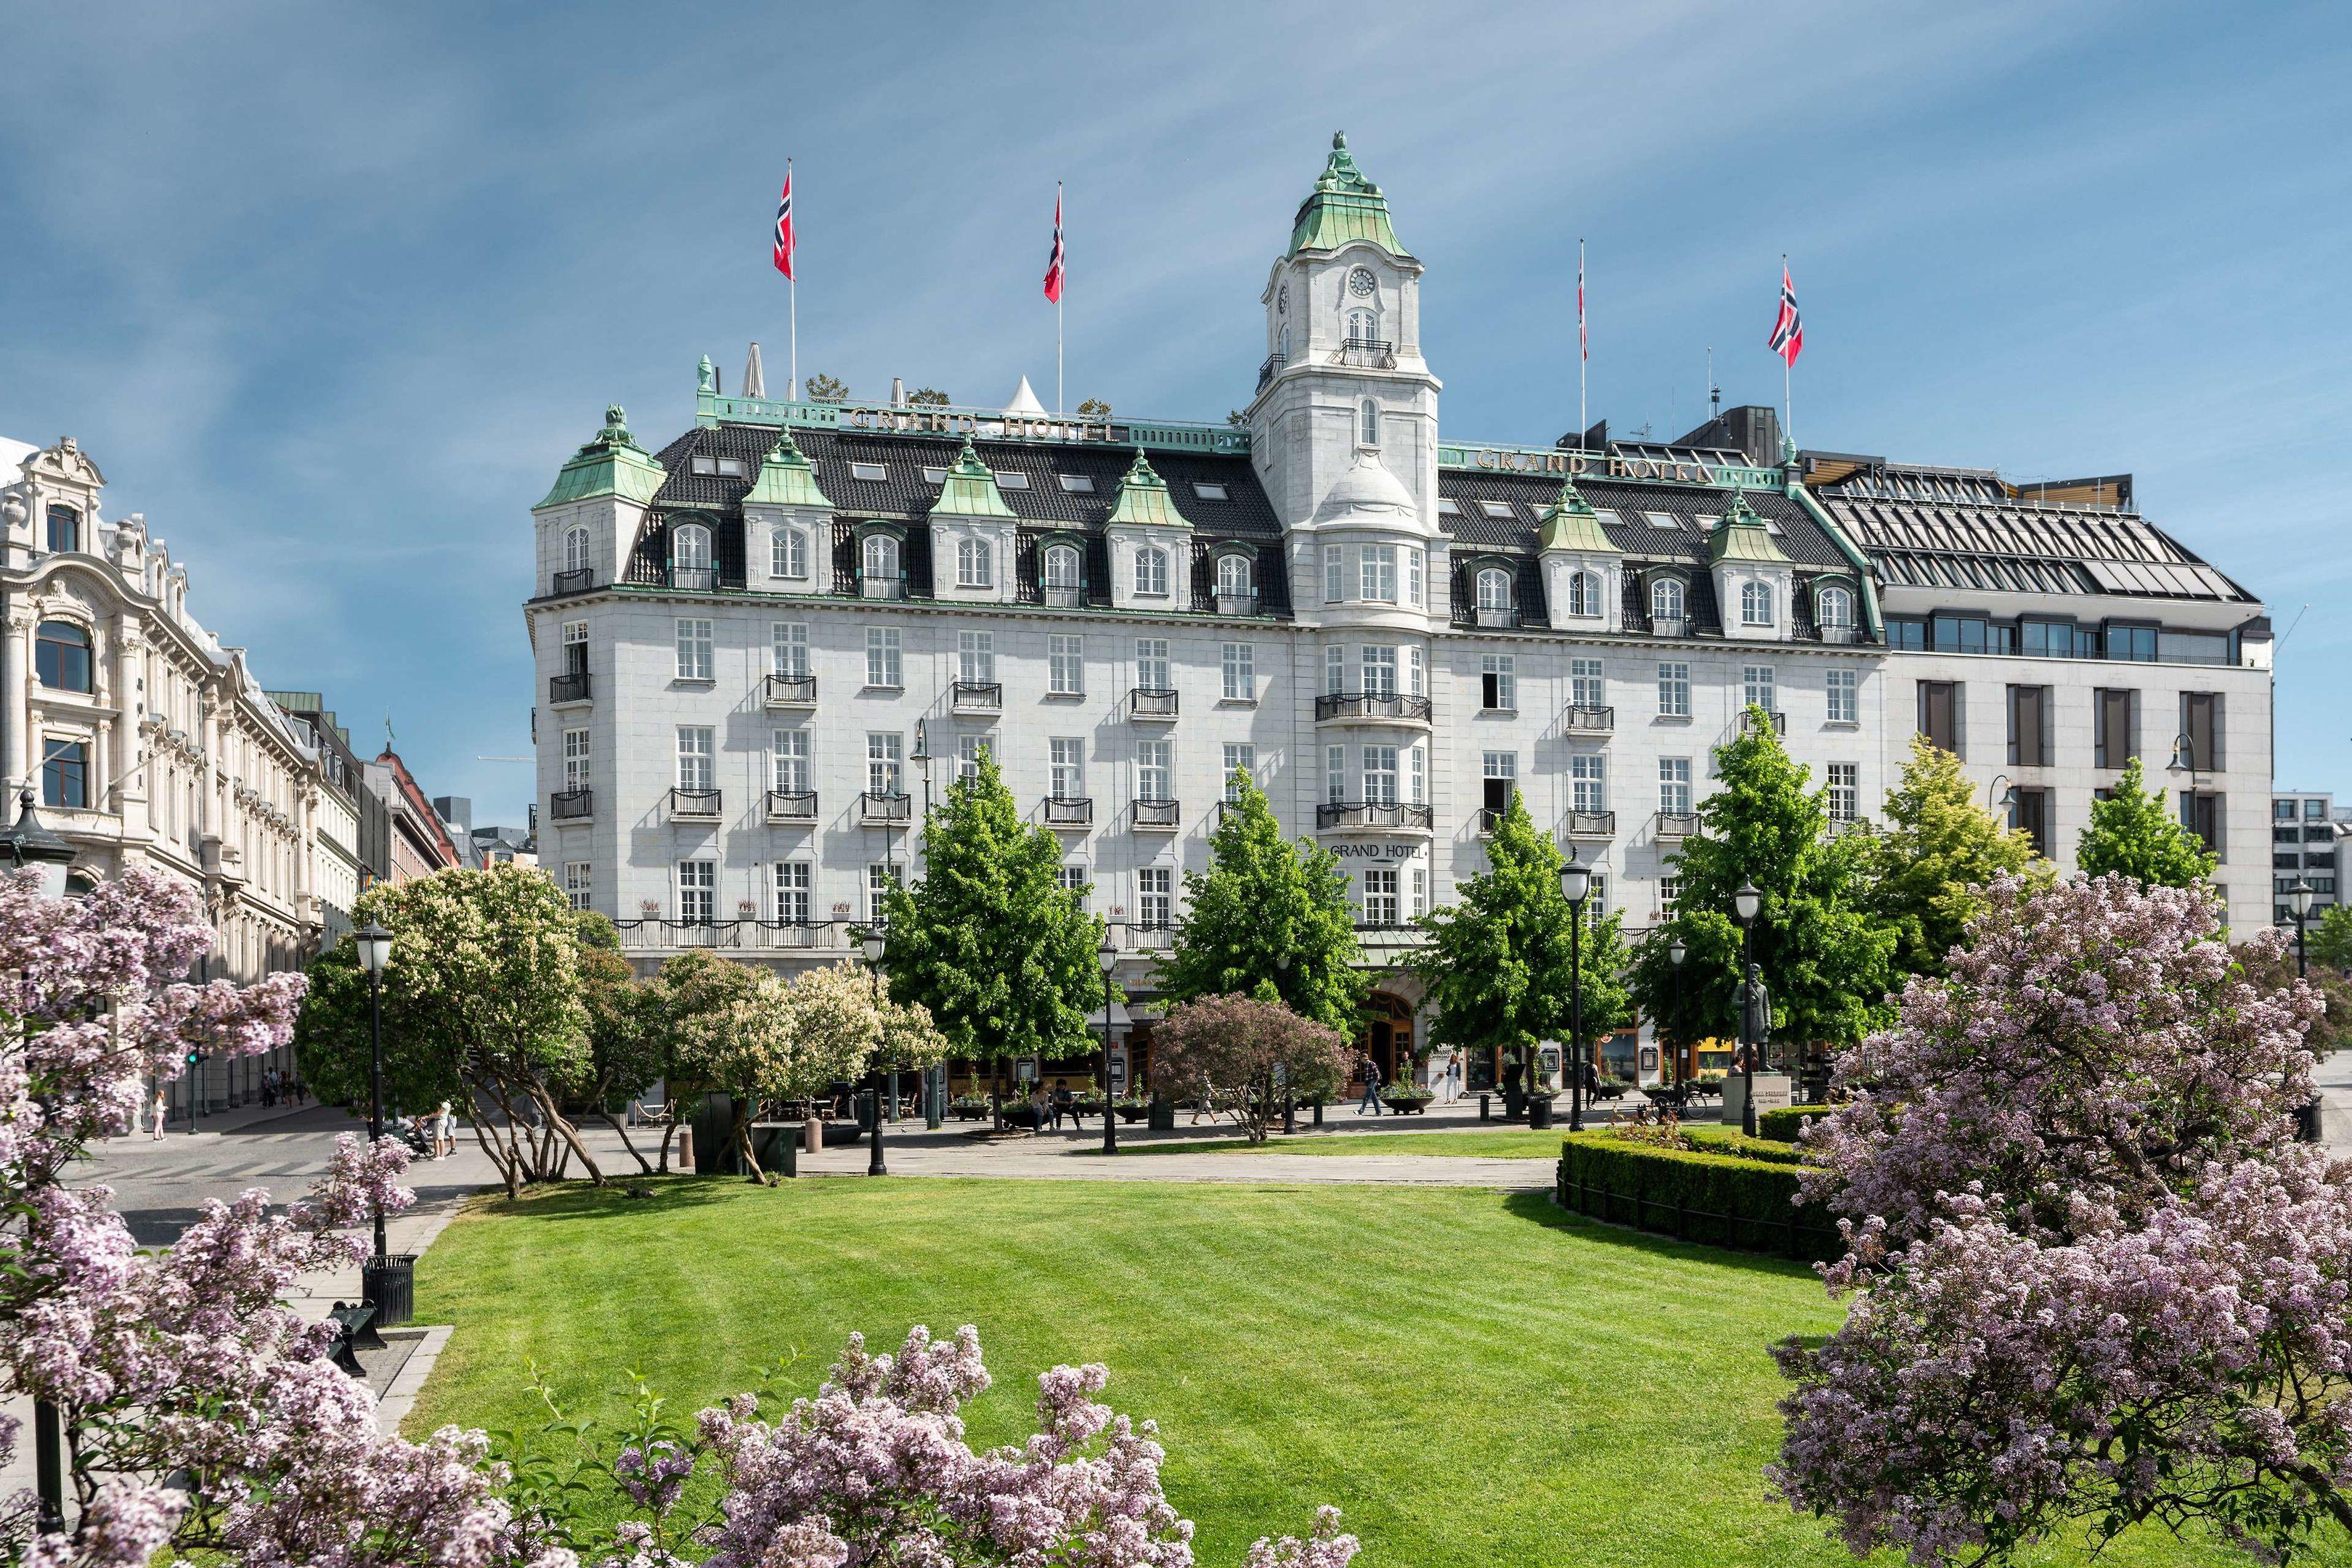 Grand Hotel Oslo by Scandic